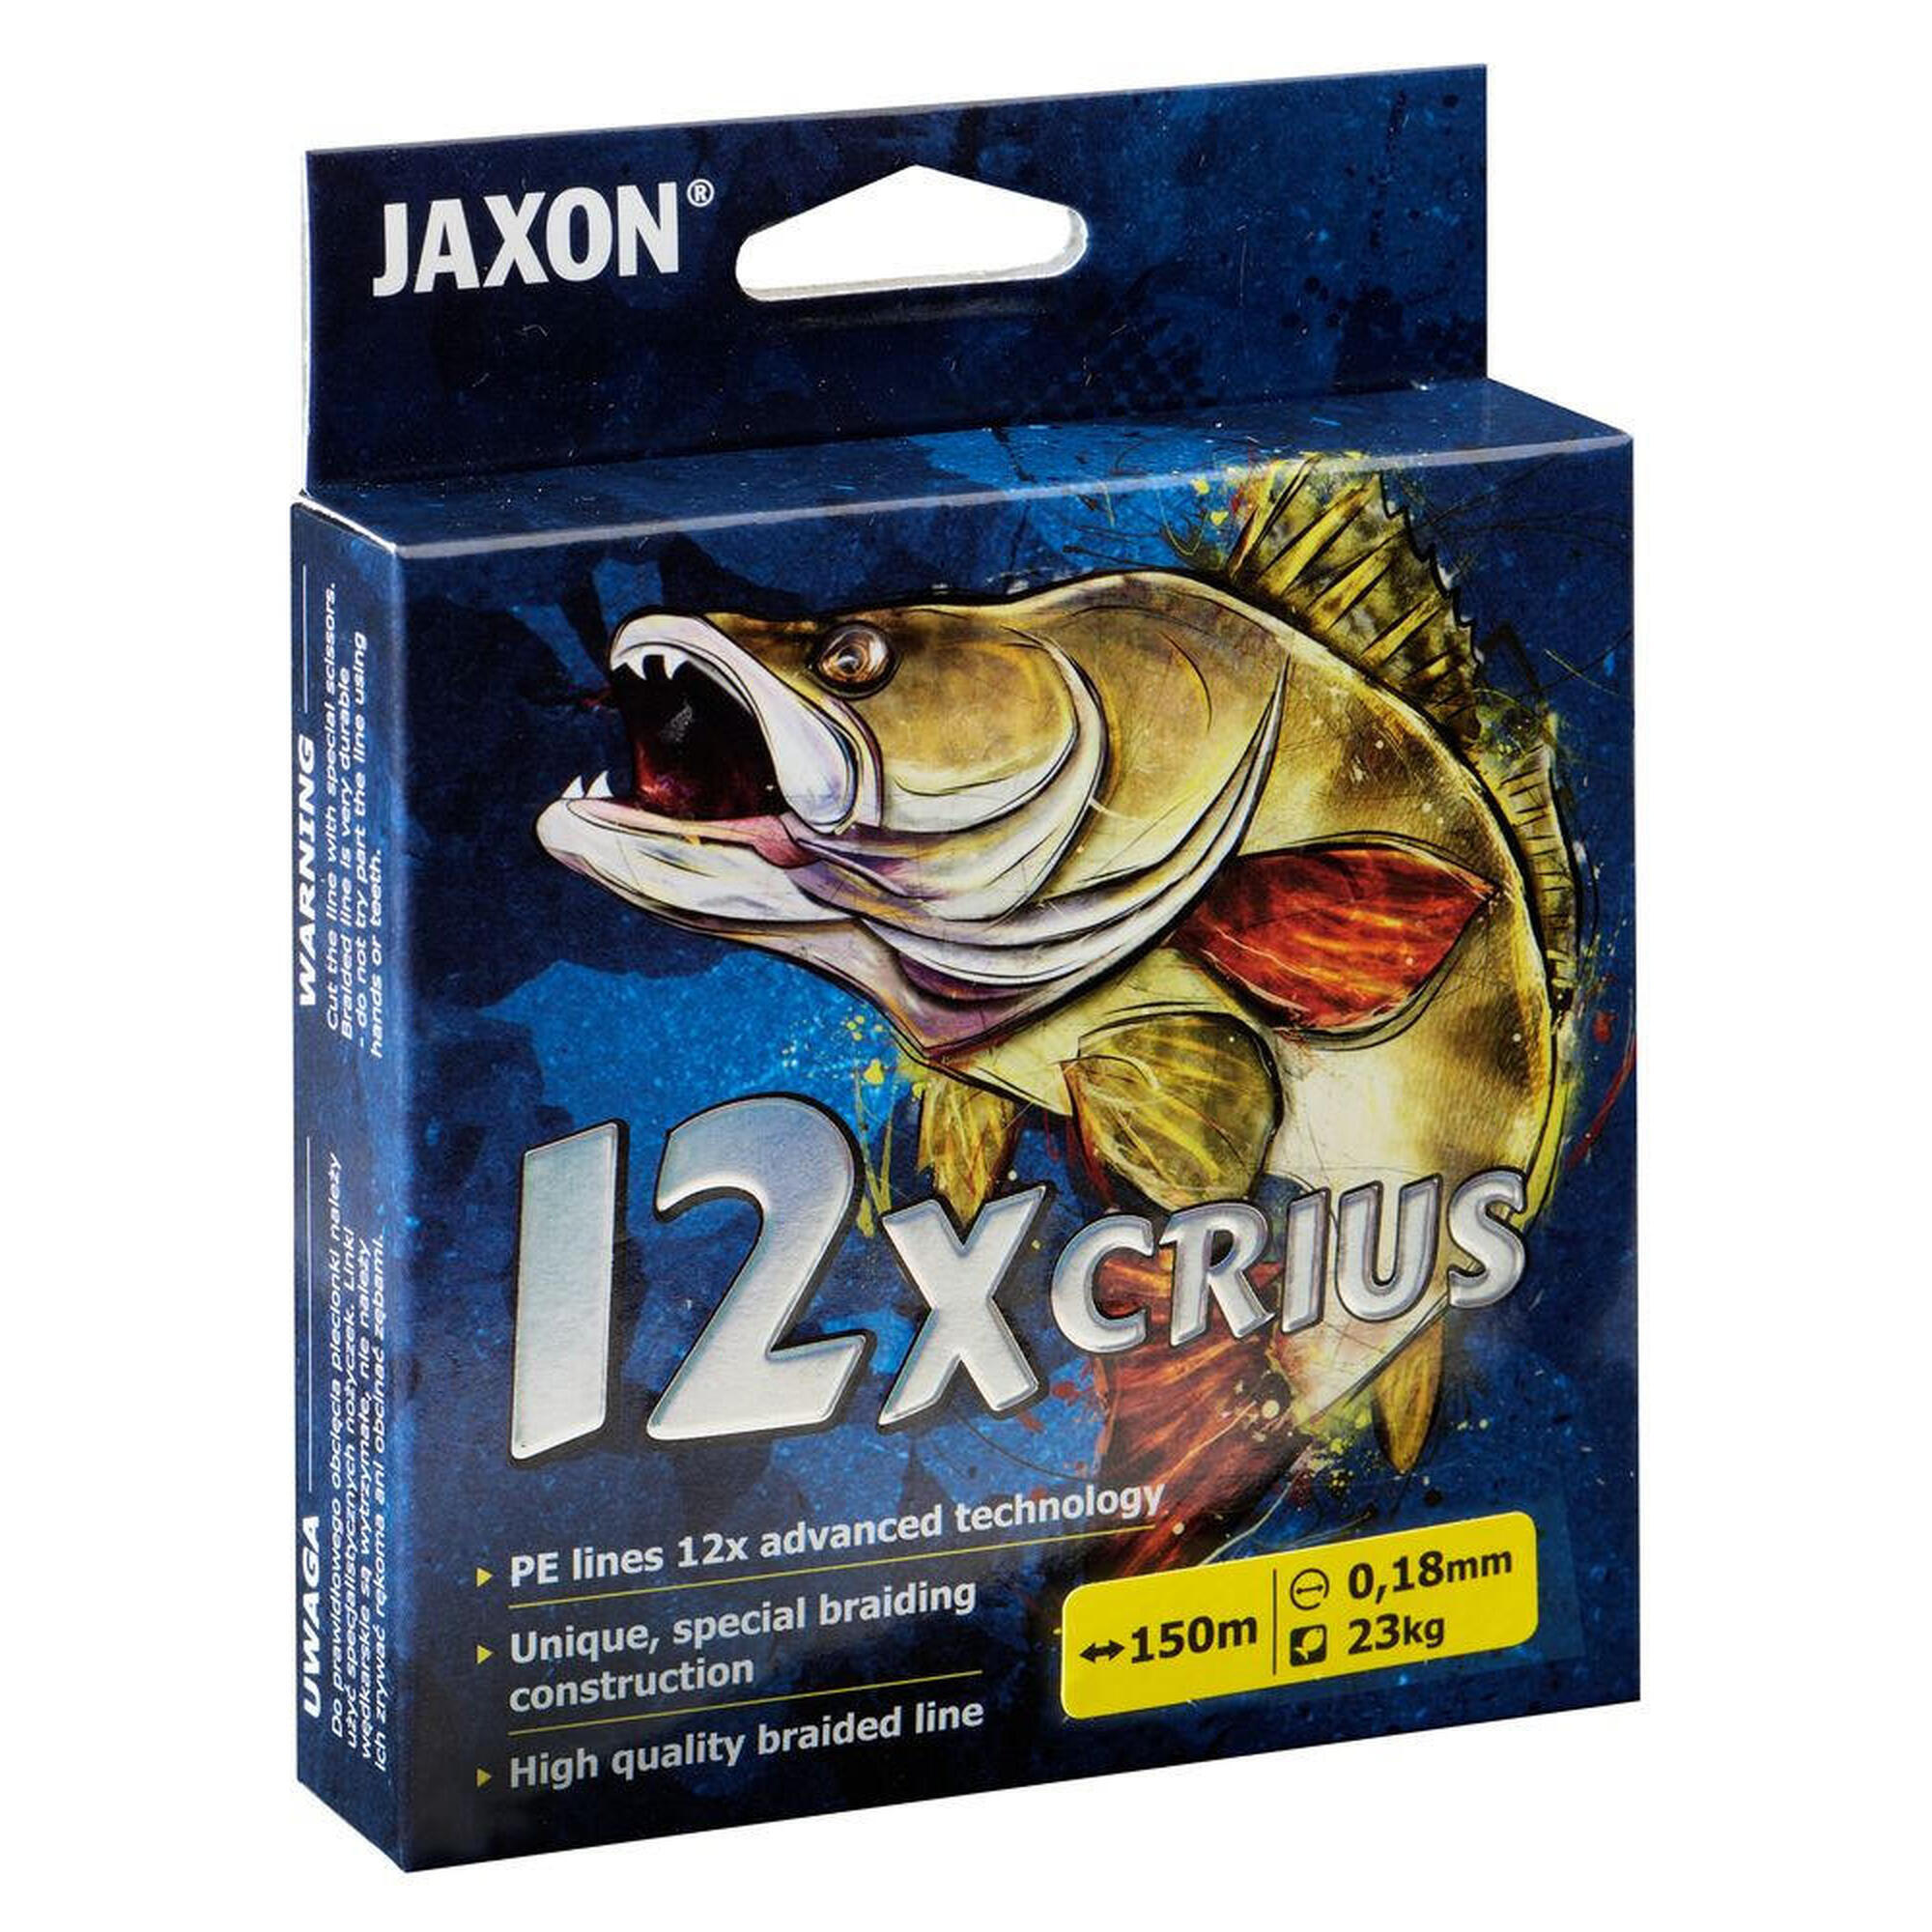 Plecionka Jaxon Crius 12X 0,16mm 150m 19kg Fluo